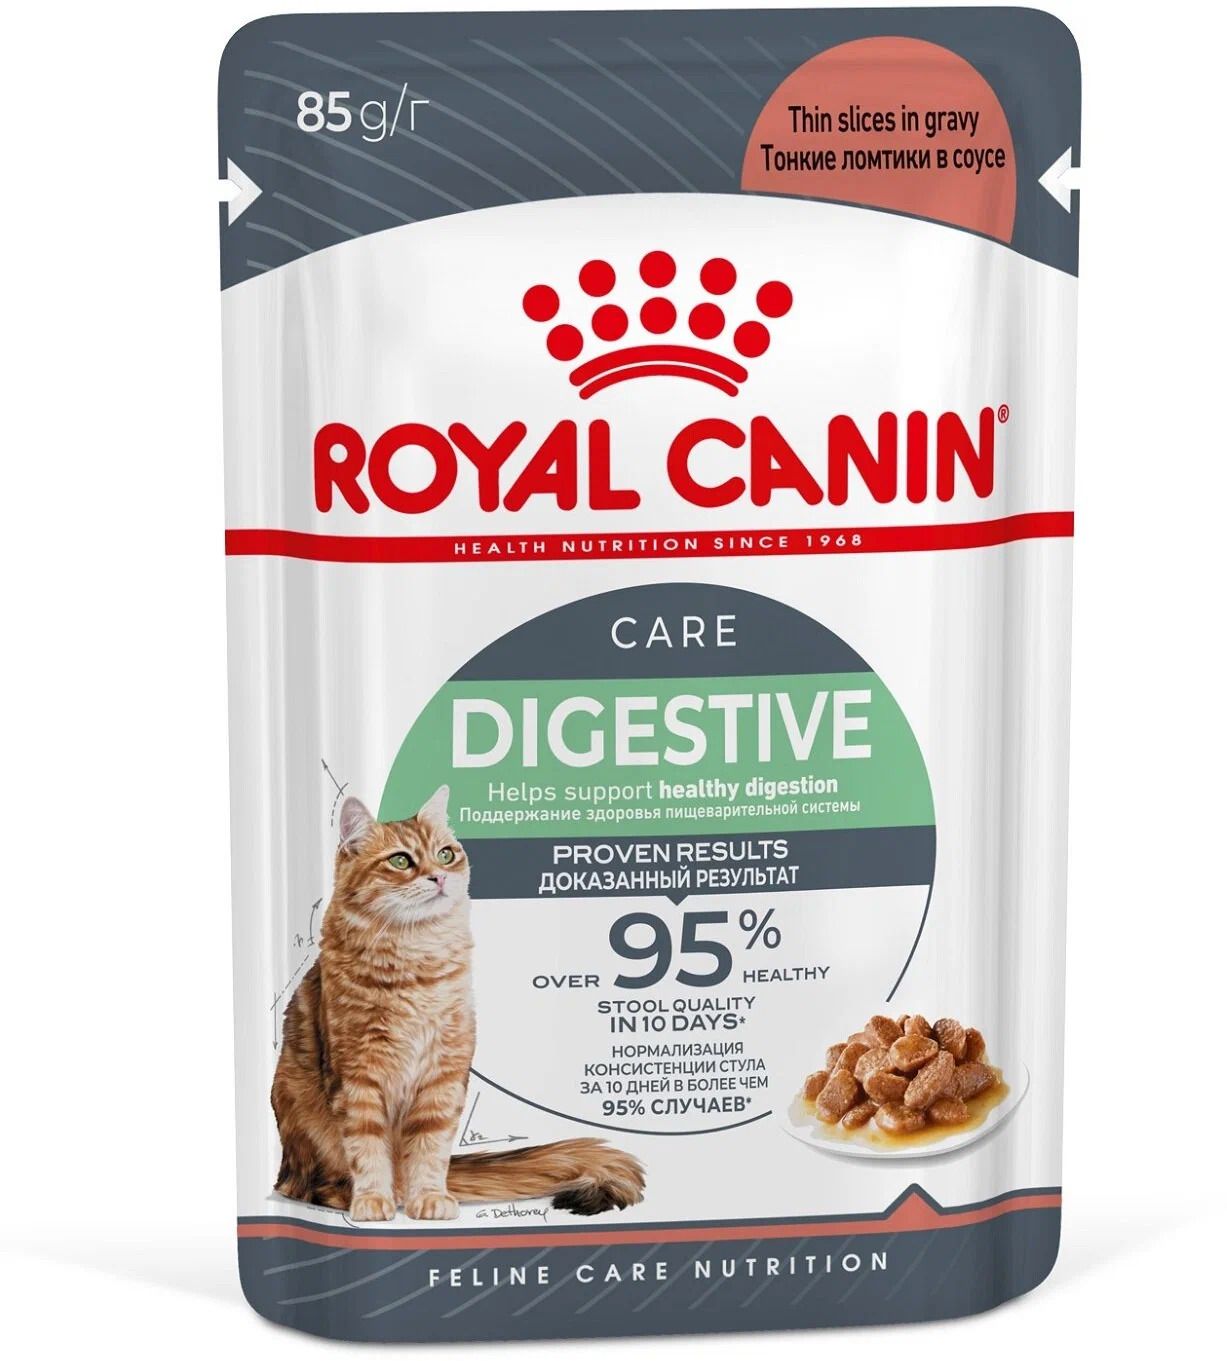 Royal canin digestive для кошек. Роял Канин дайджест Сенситив паучи. Роял Канин Диджестив для котов.